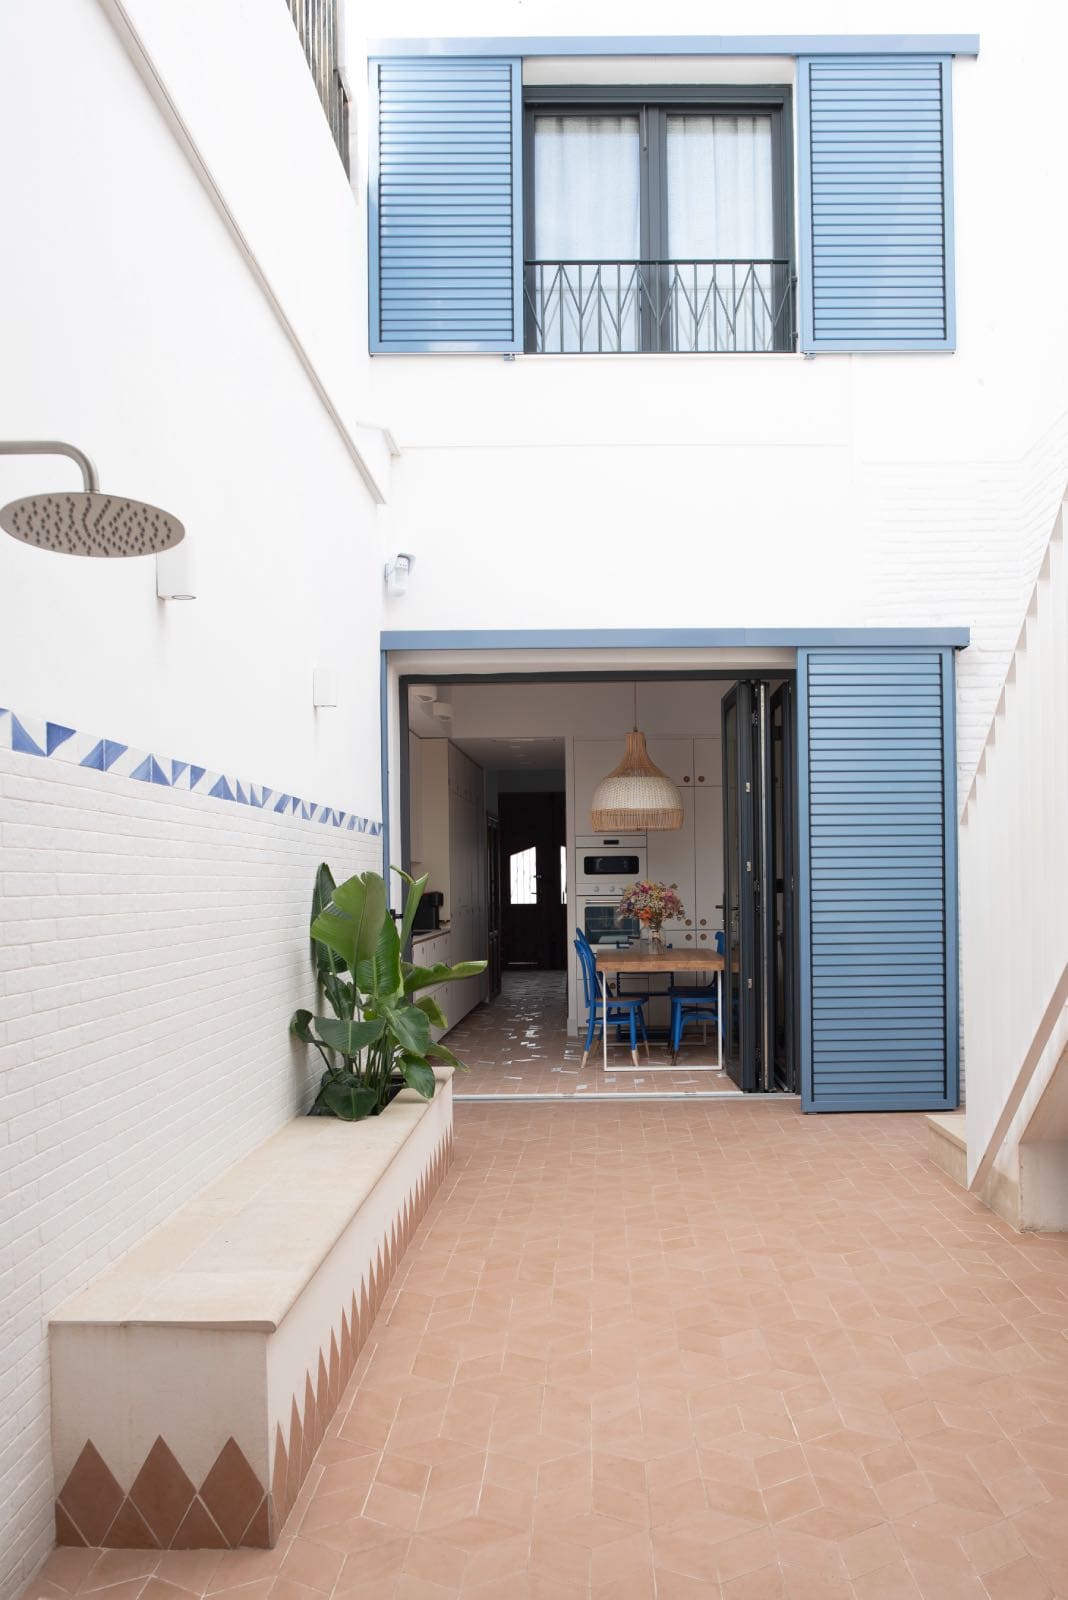 patio con azulejos de barro en casa moderna mediterránea en valencia